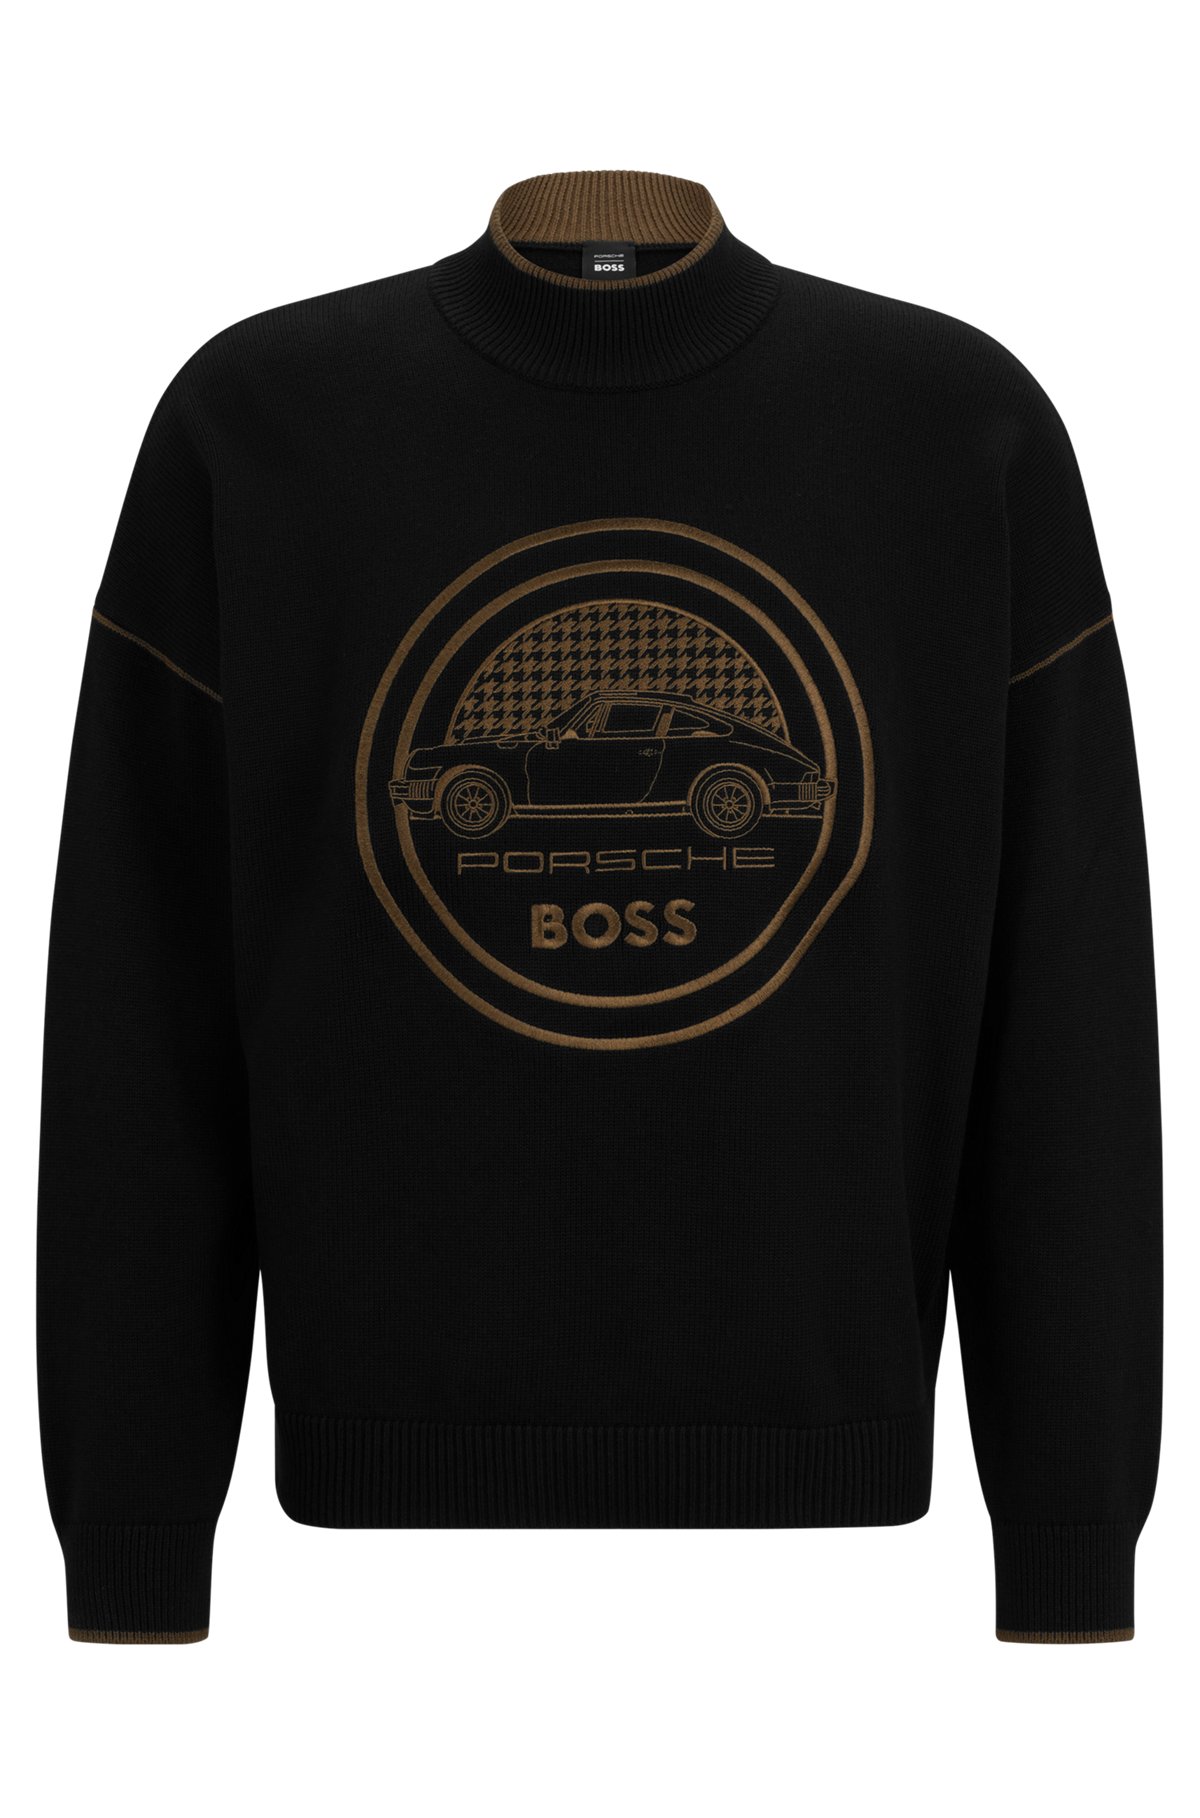 Porsche x BOSSカプセルロゴ スウェットシャツ コットン/ウール, ブラック